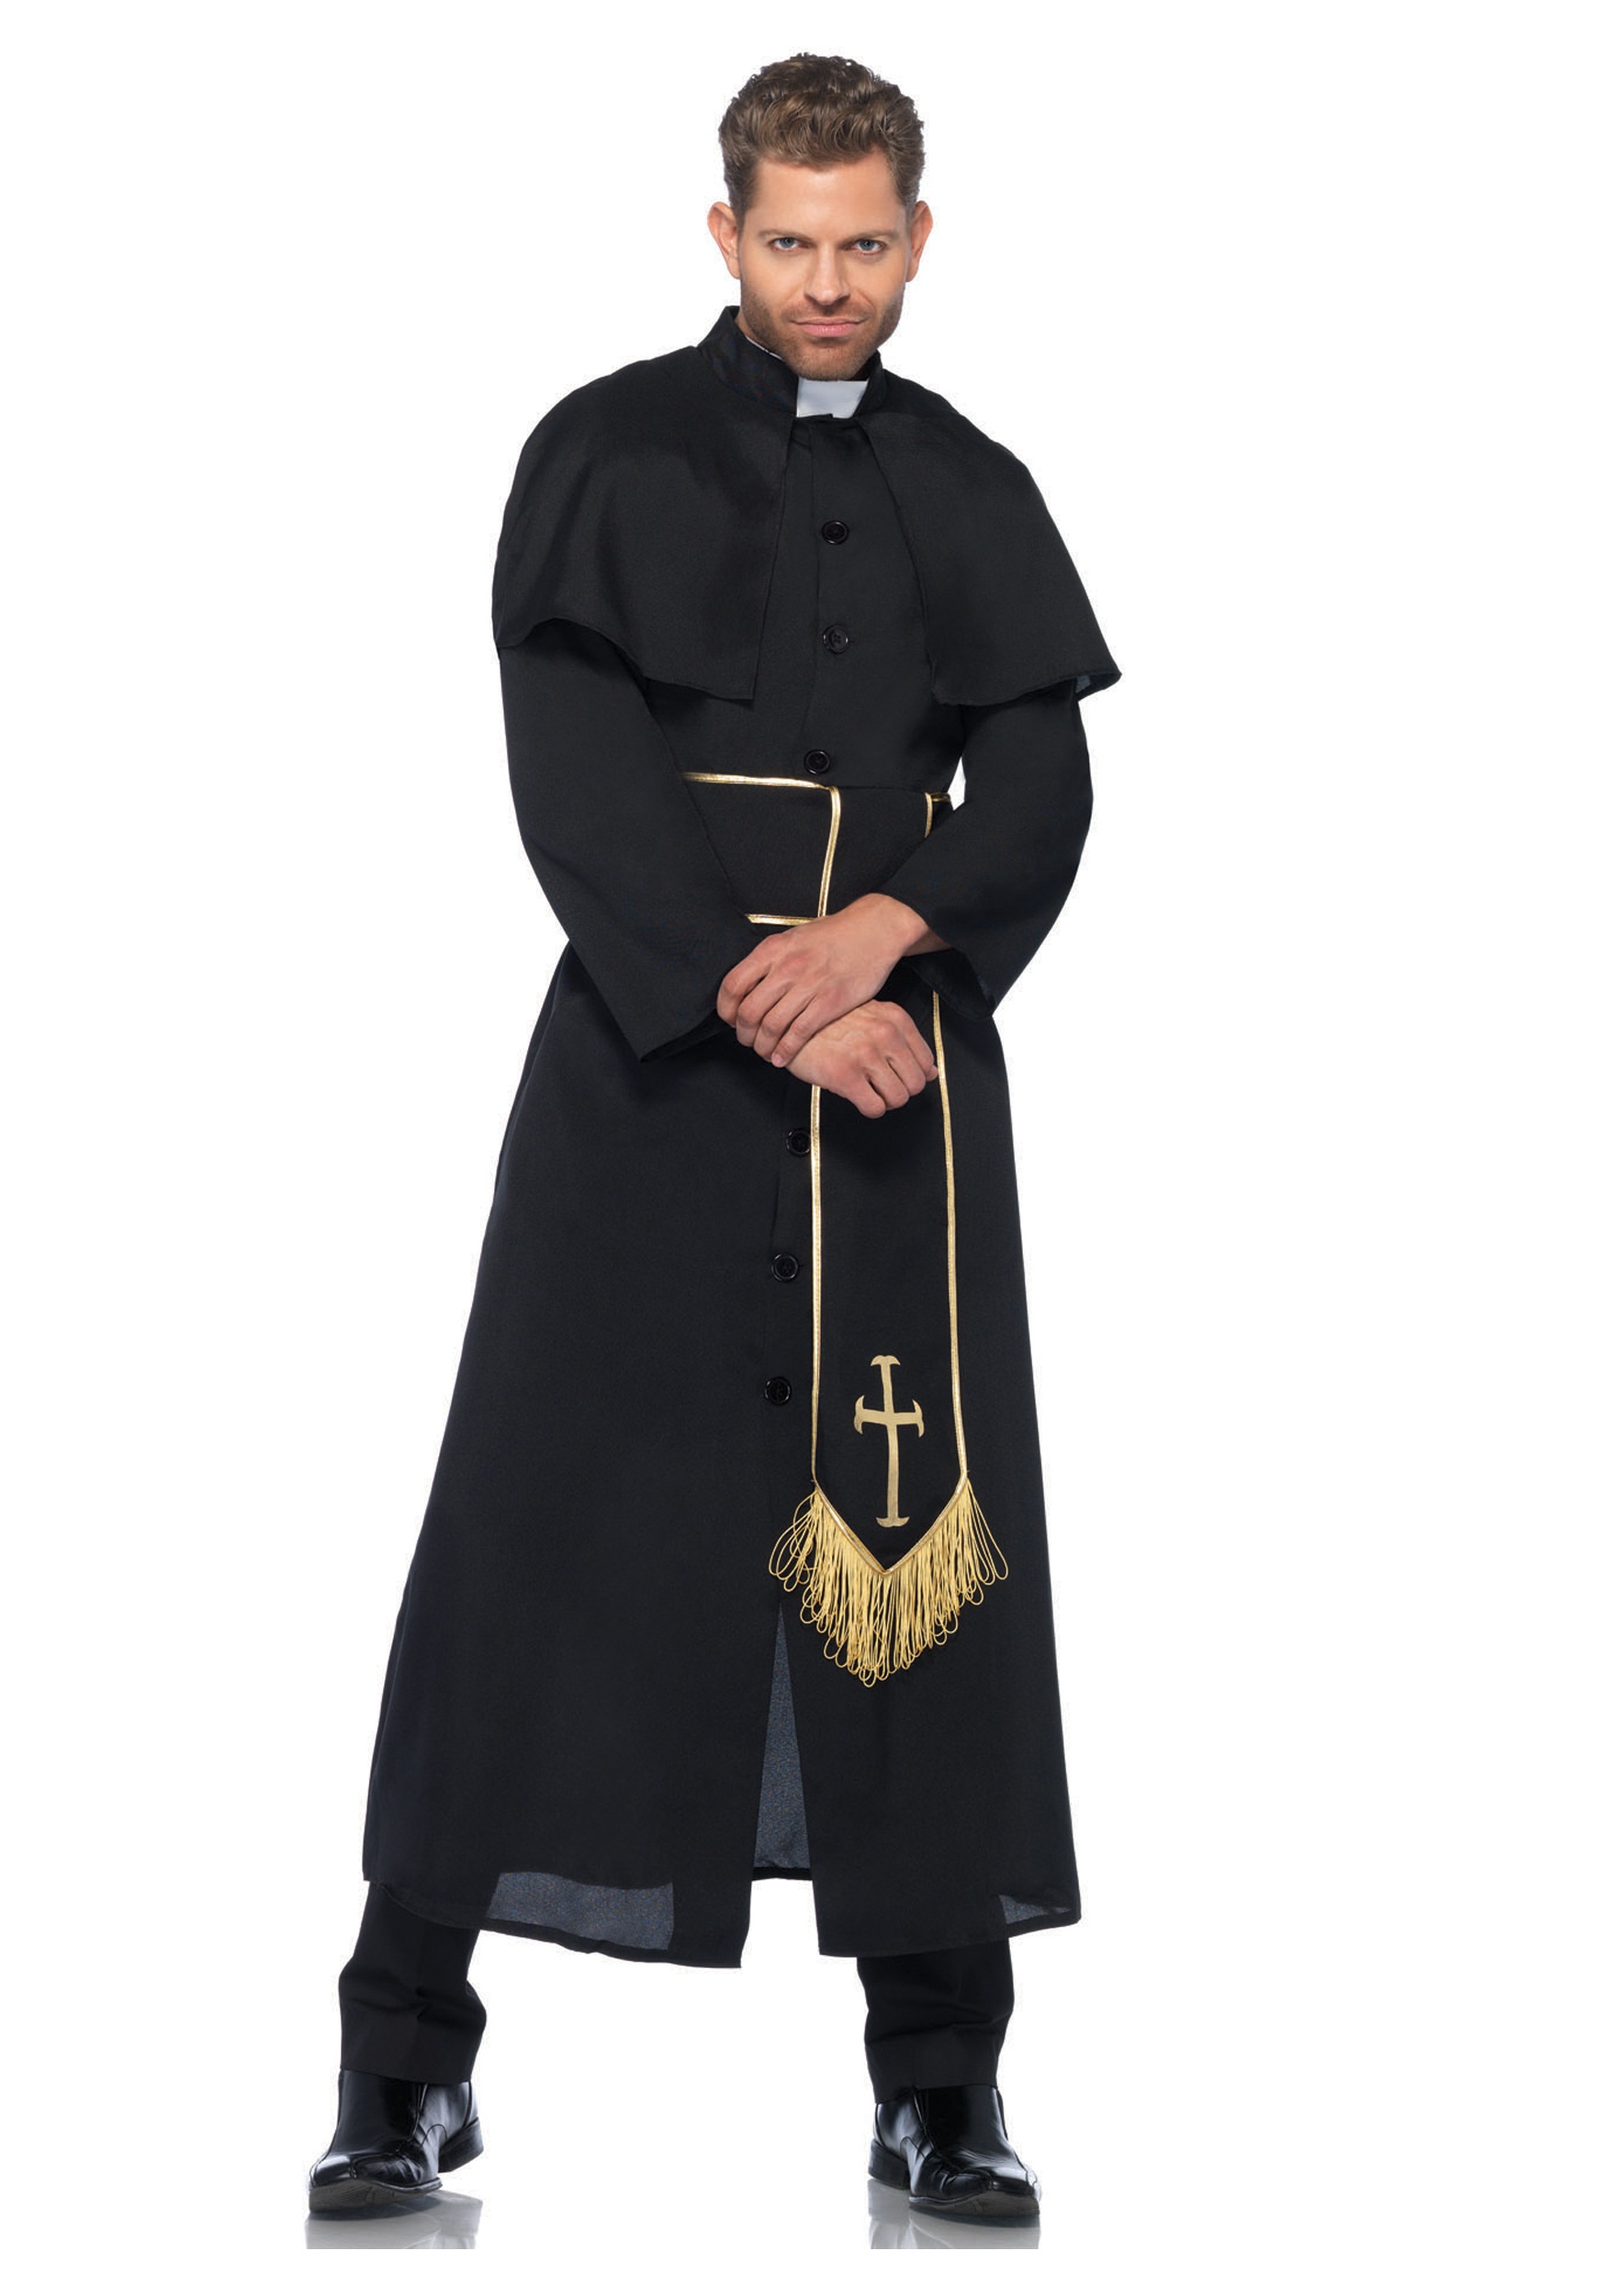 Priest #6